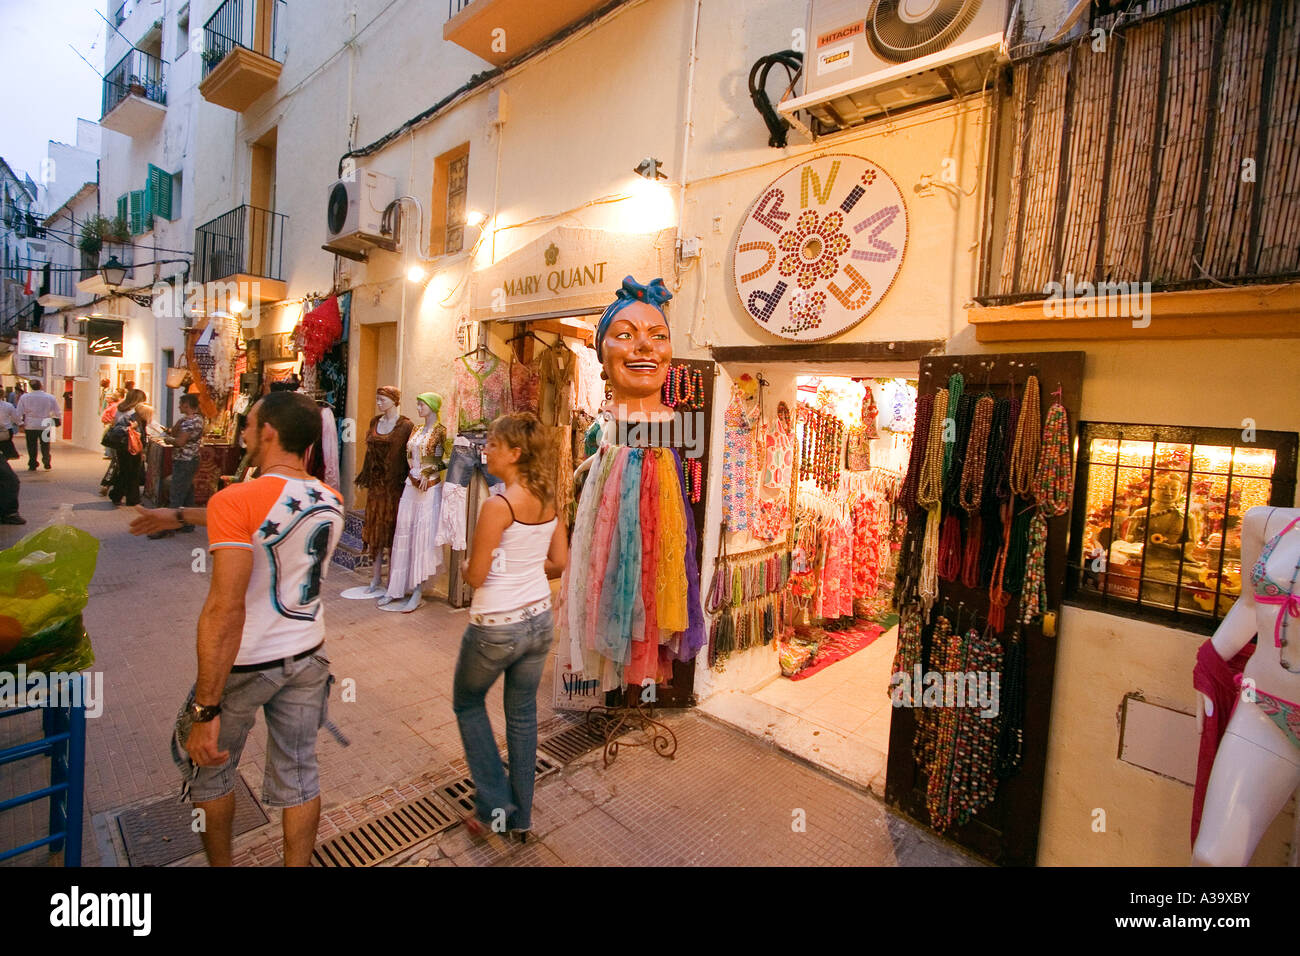 Spain Baleares island Ibiza town street market shops Stock Photo